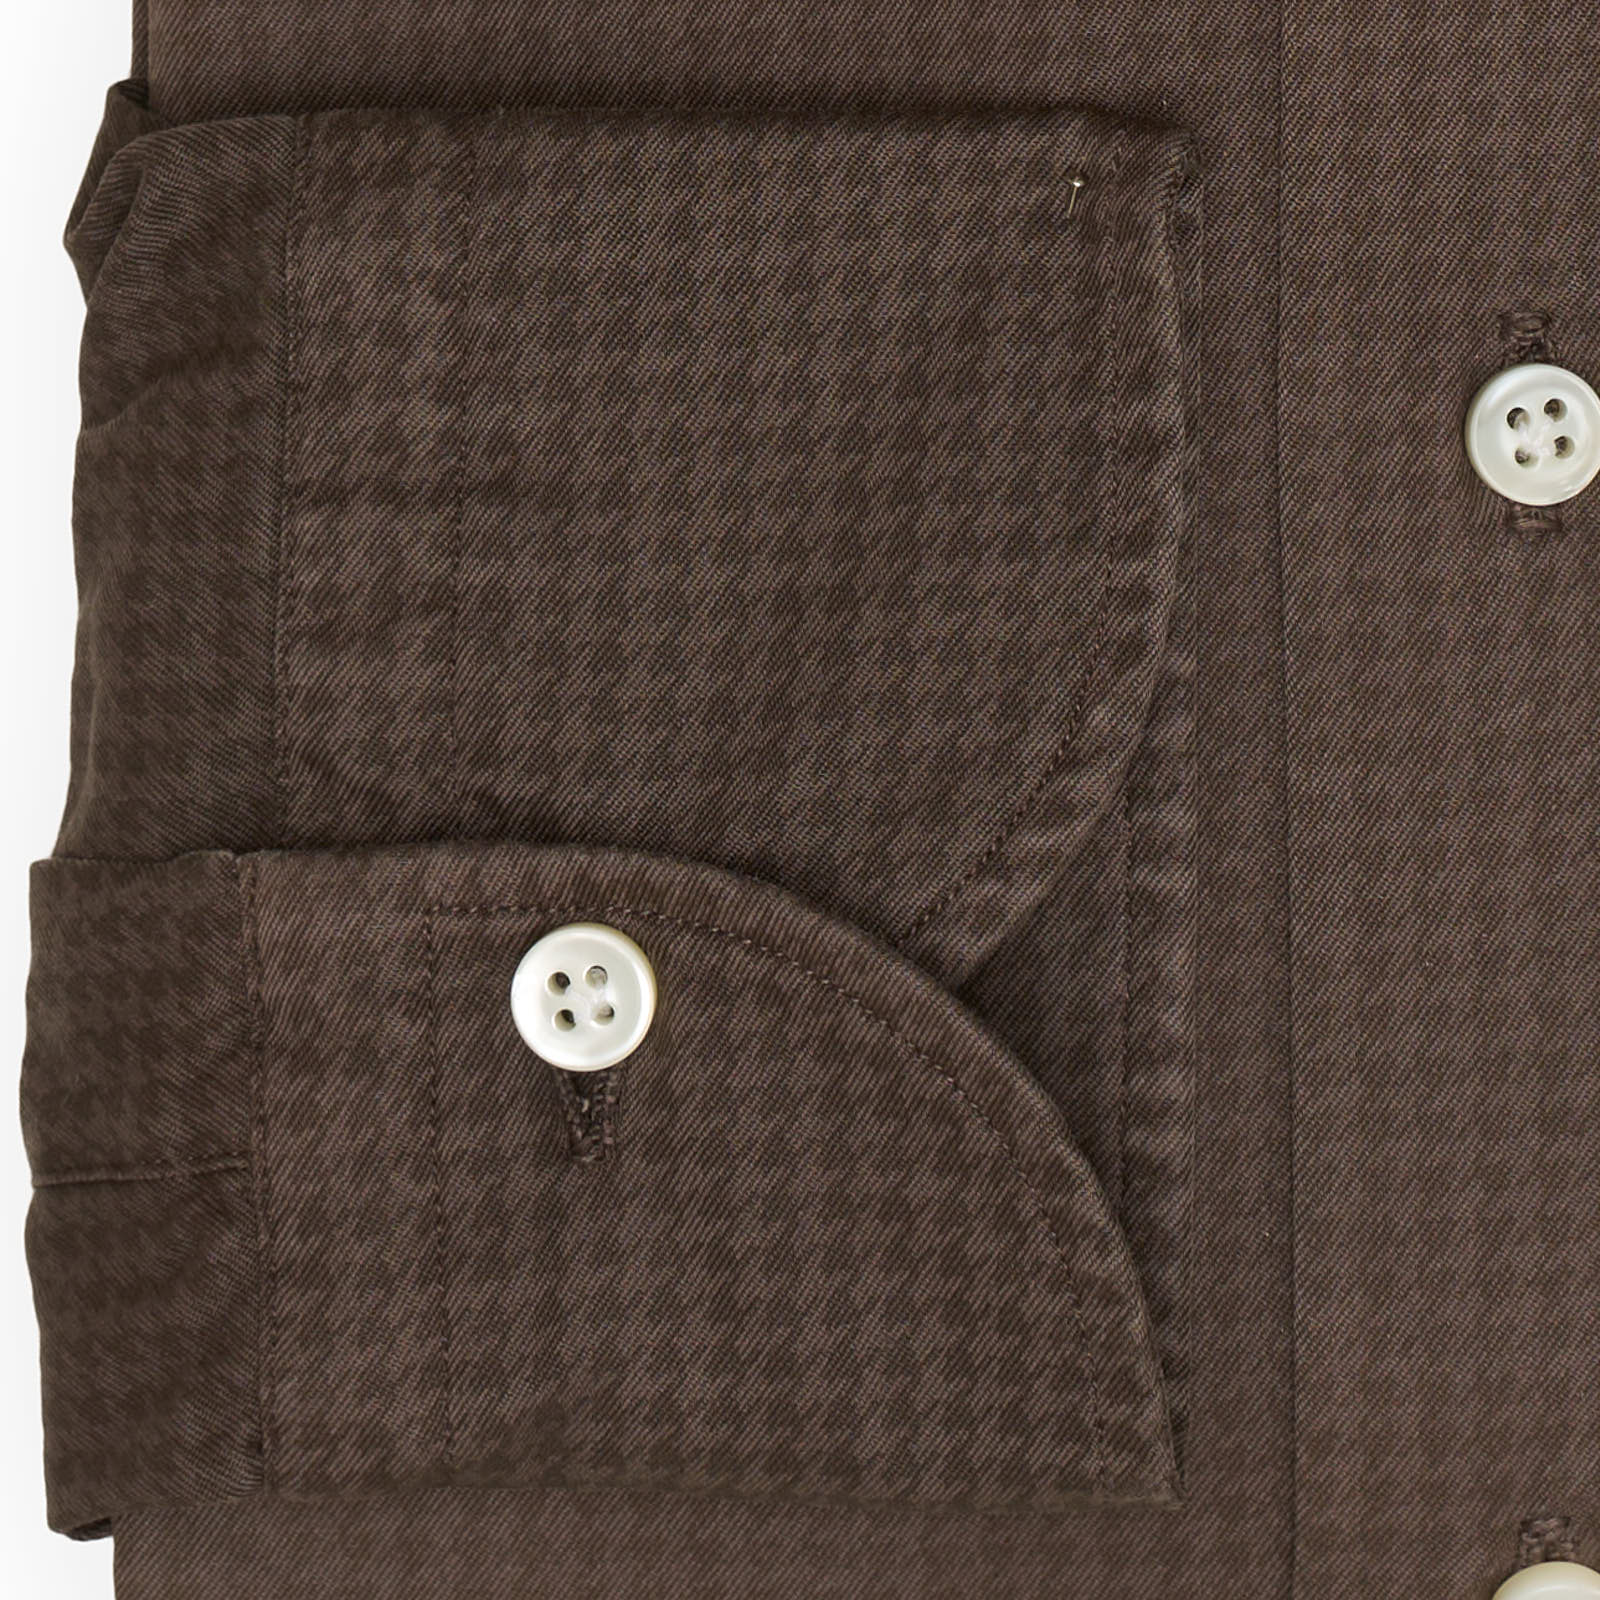 VINCENZO DI RUGGIERO Handmade Brown Sheperd's Check Cotton Shirt EU 39 NEW US 15.5